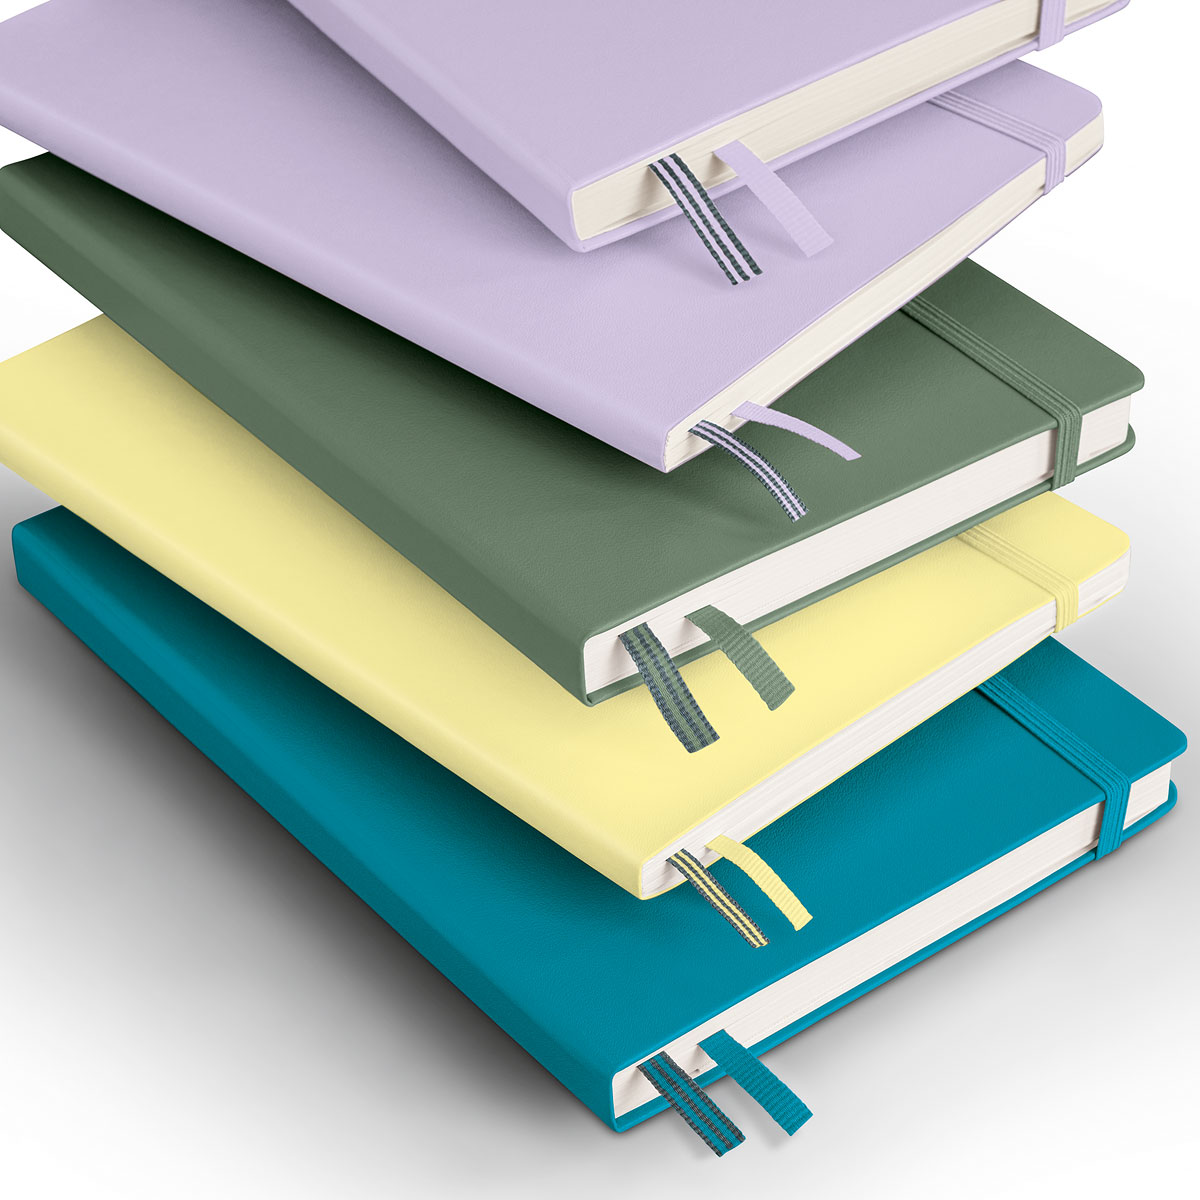 Notebook A5 Medium Ocean i gruppen Papir & Blok / Skriv og noter / Notesbøger hos Pen Store (127322_r)